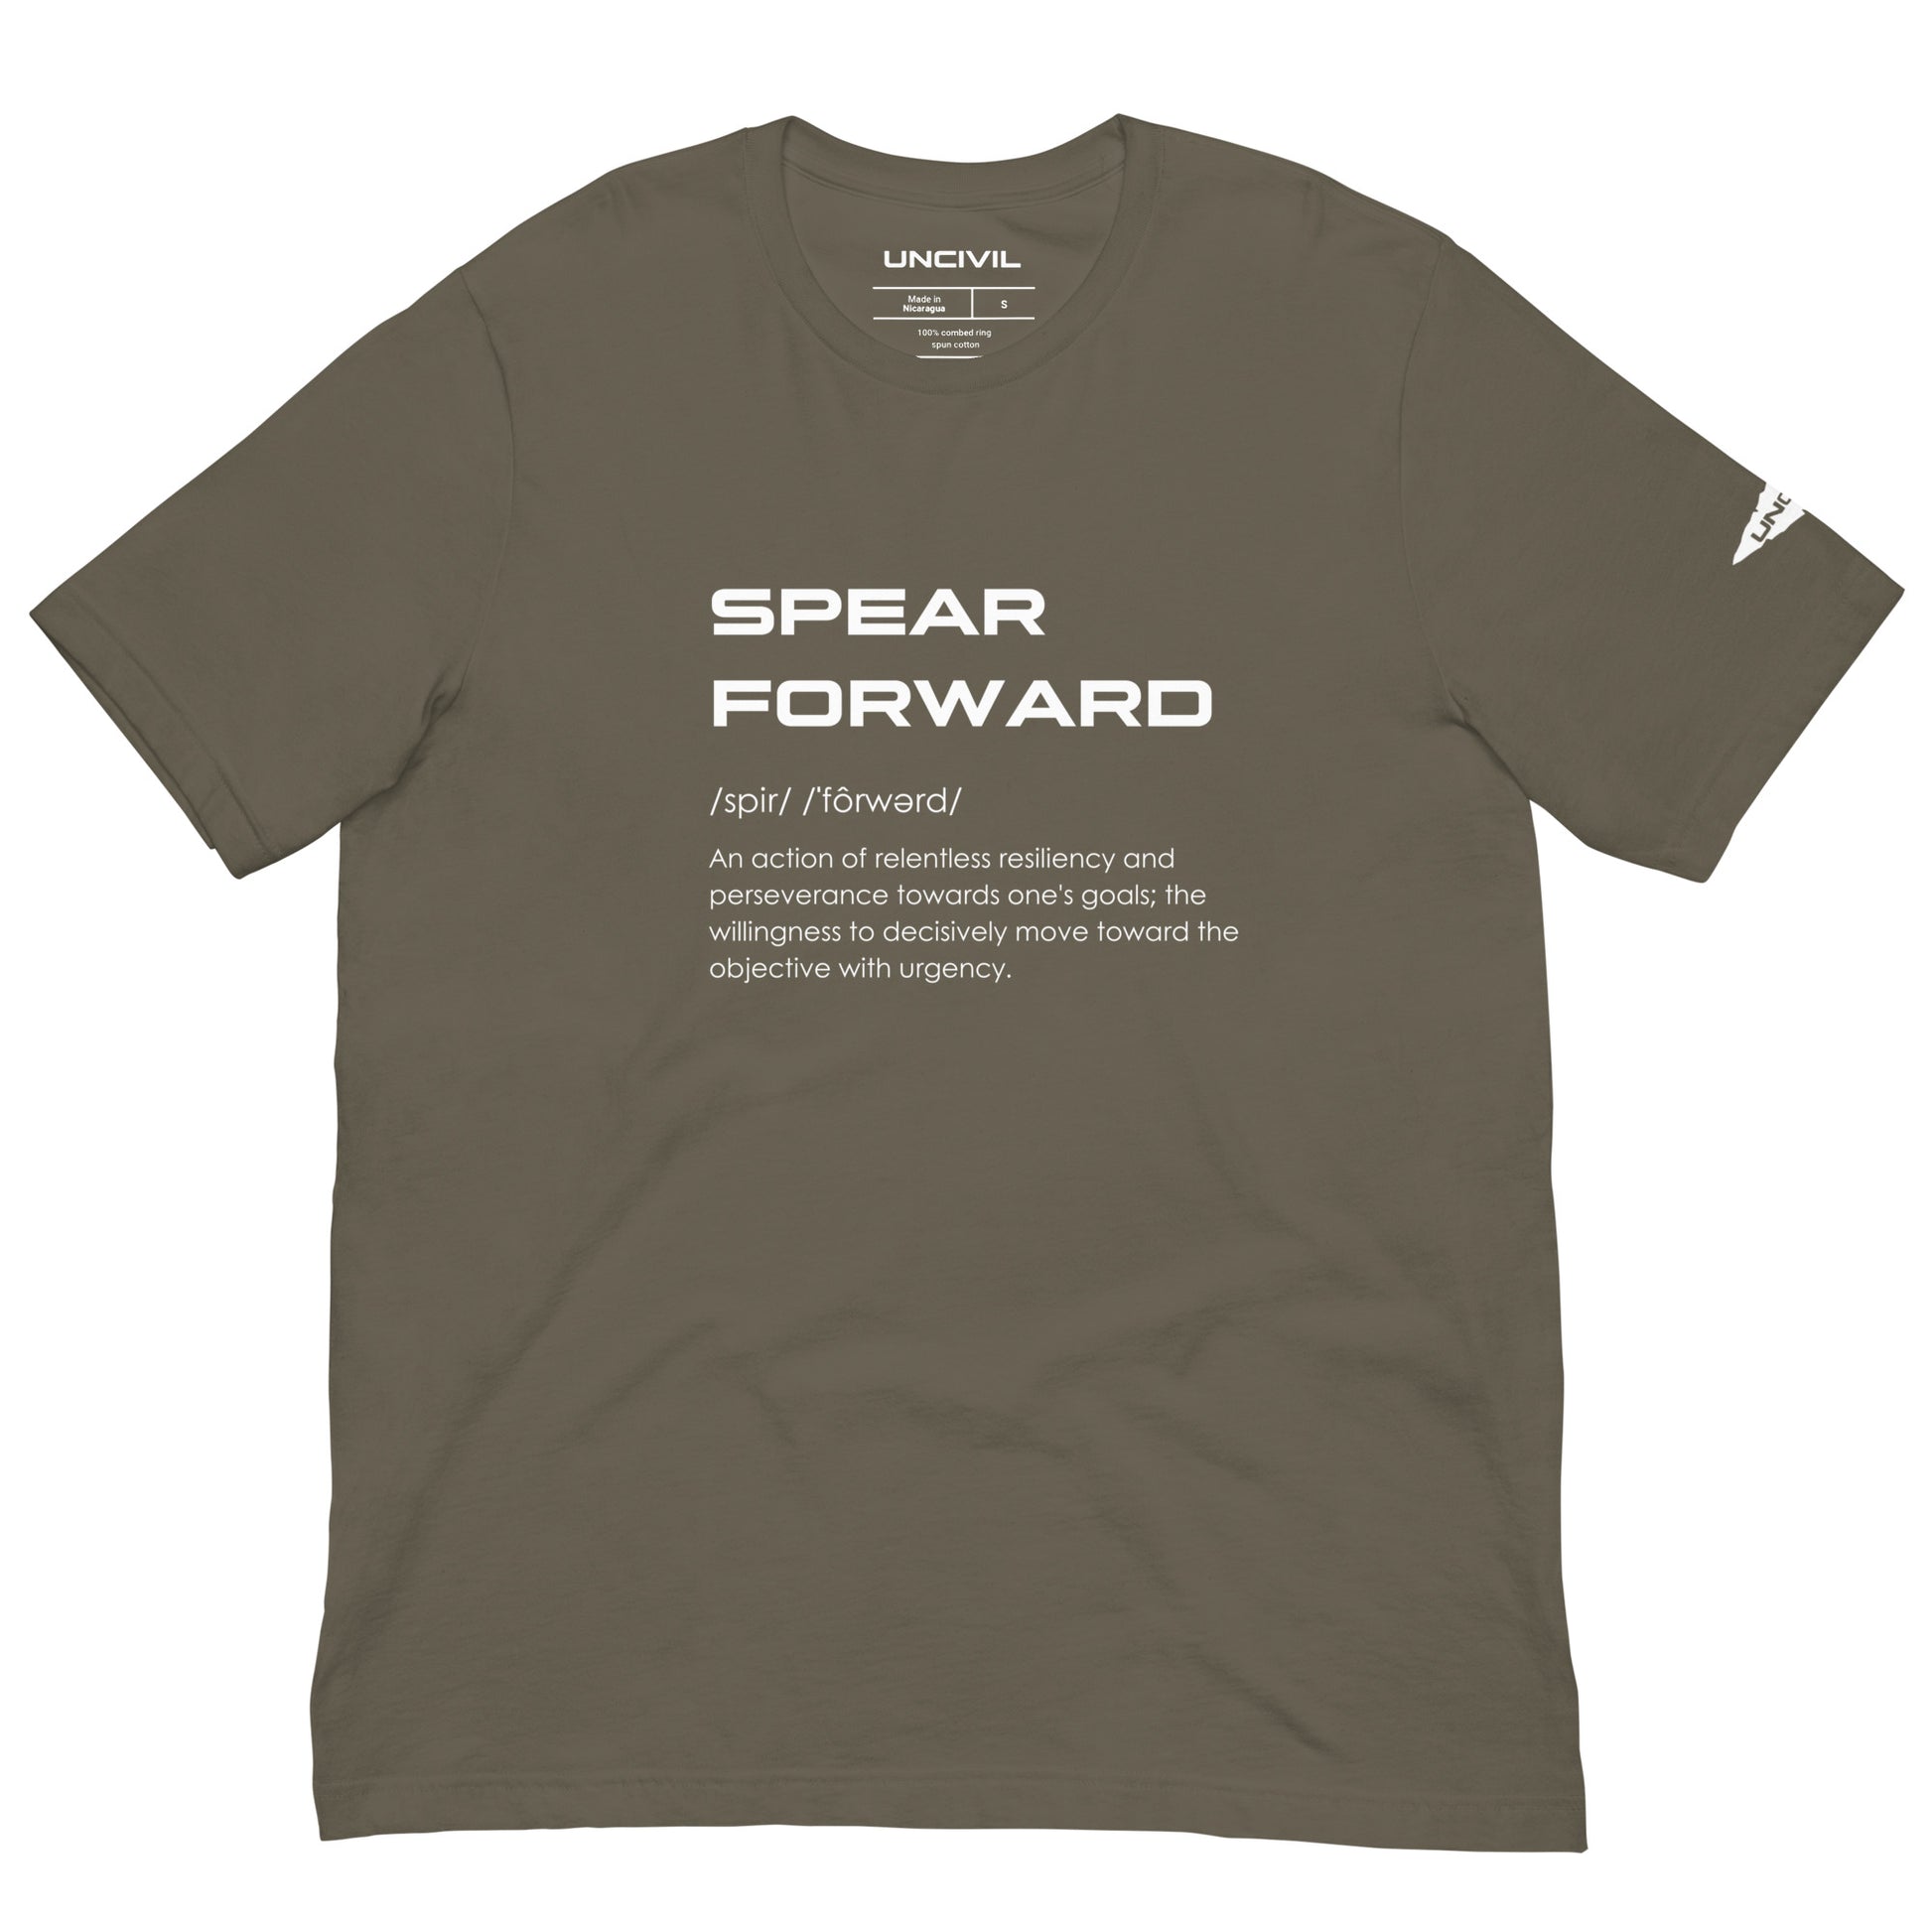 SPEAR Forward definition UNCIVIL army green shirt